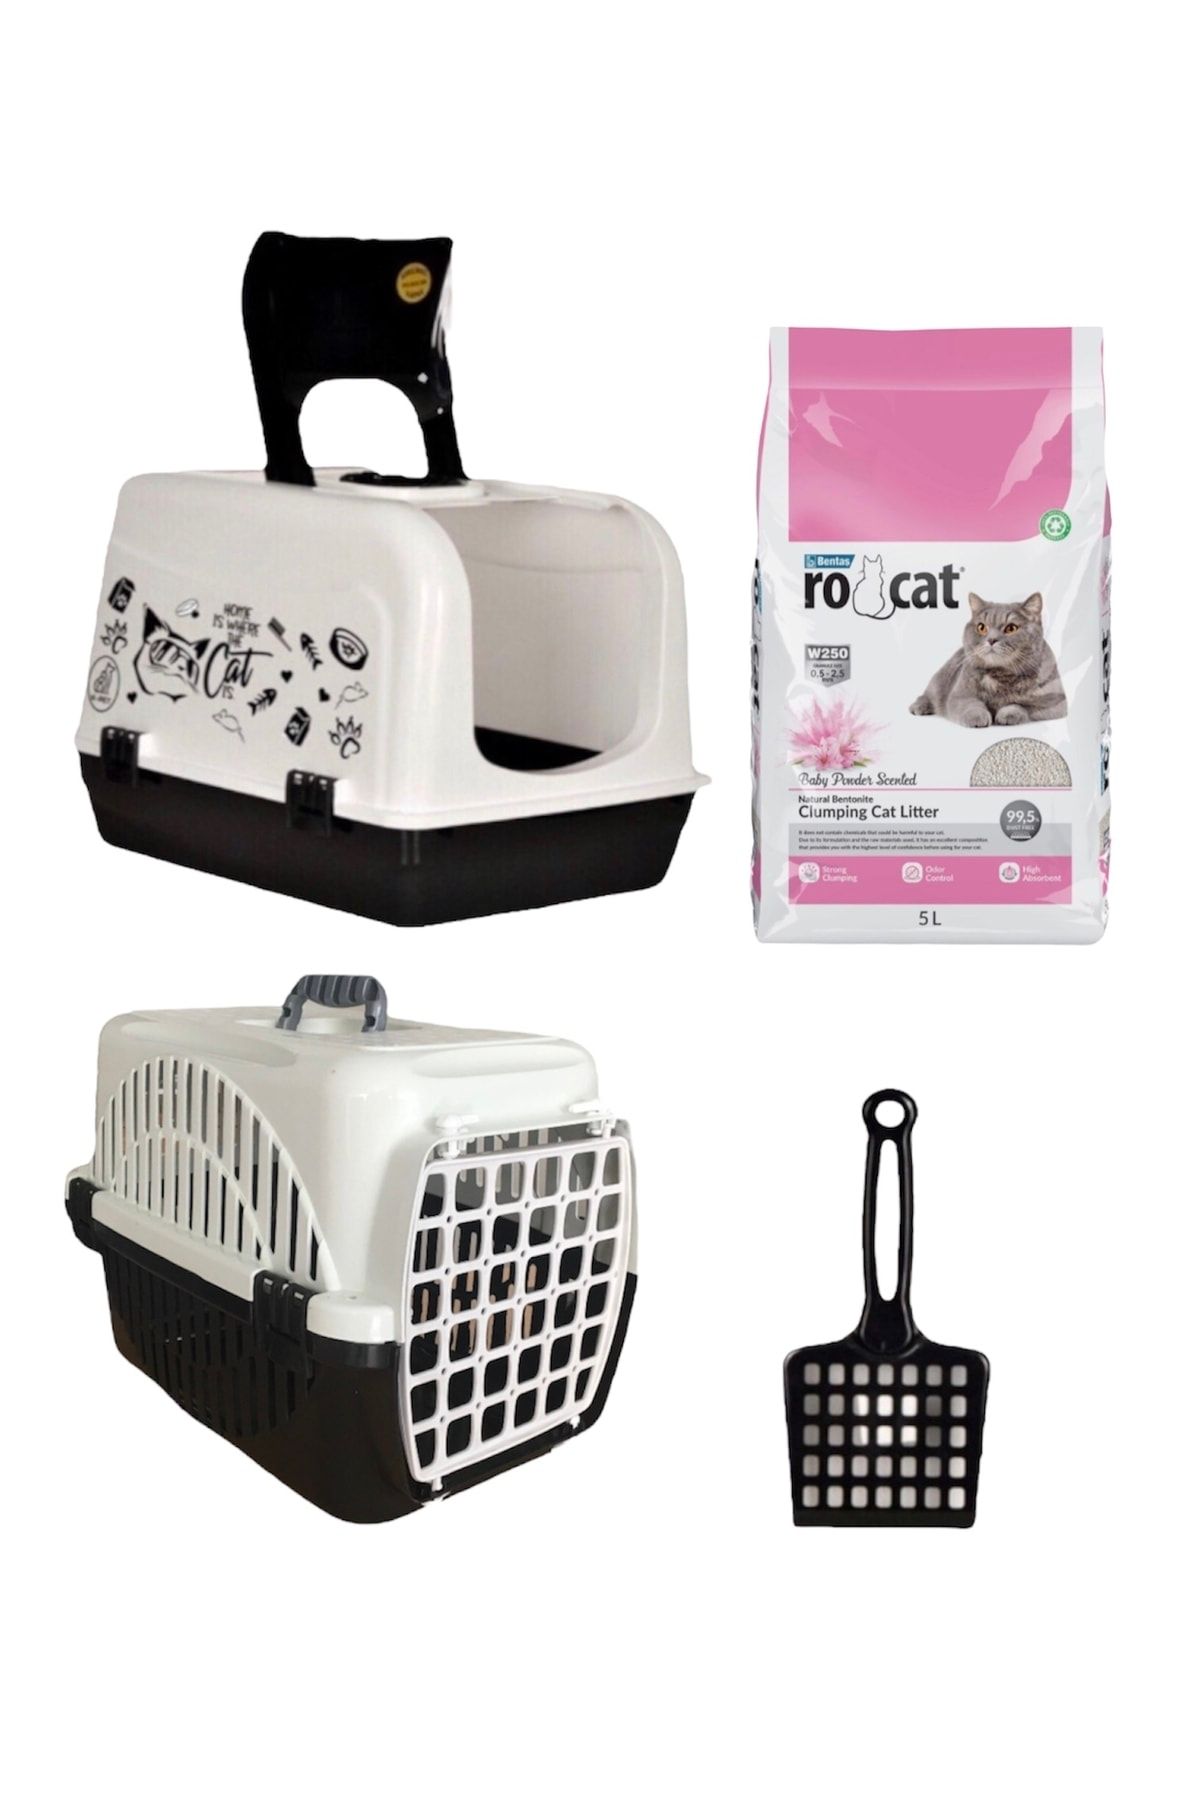 Çiftsan Maxi Karbon Filtreli Kapalı Kedi Tuvaleti Kırılmaz Kürek Rocat Kedi Kumu 5l Kedi Taşıma Kabı